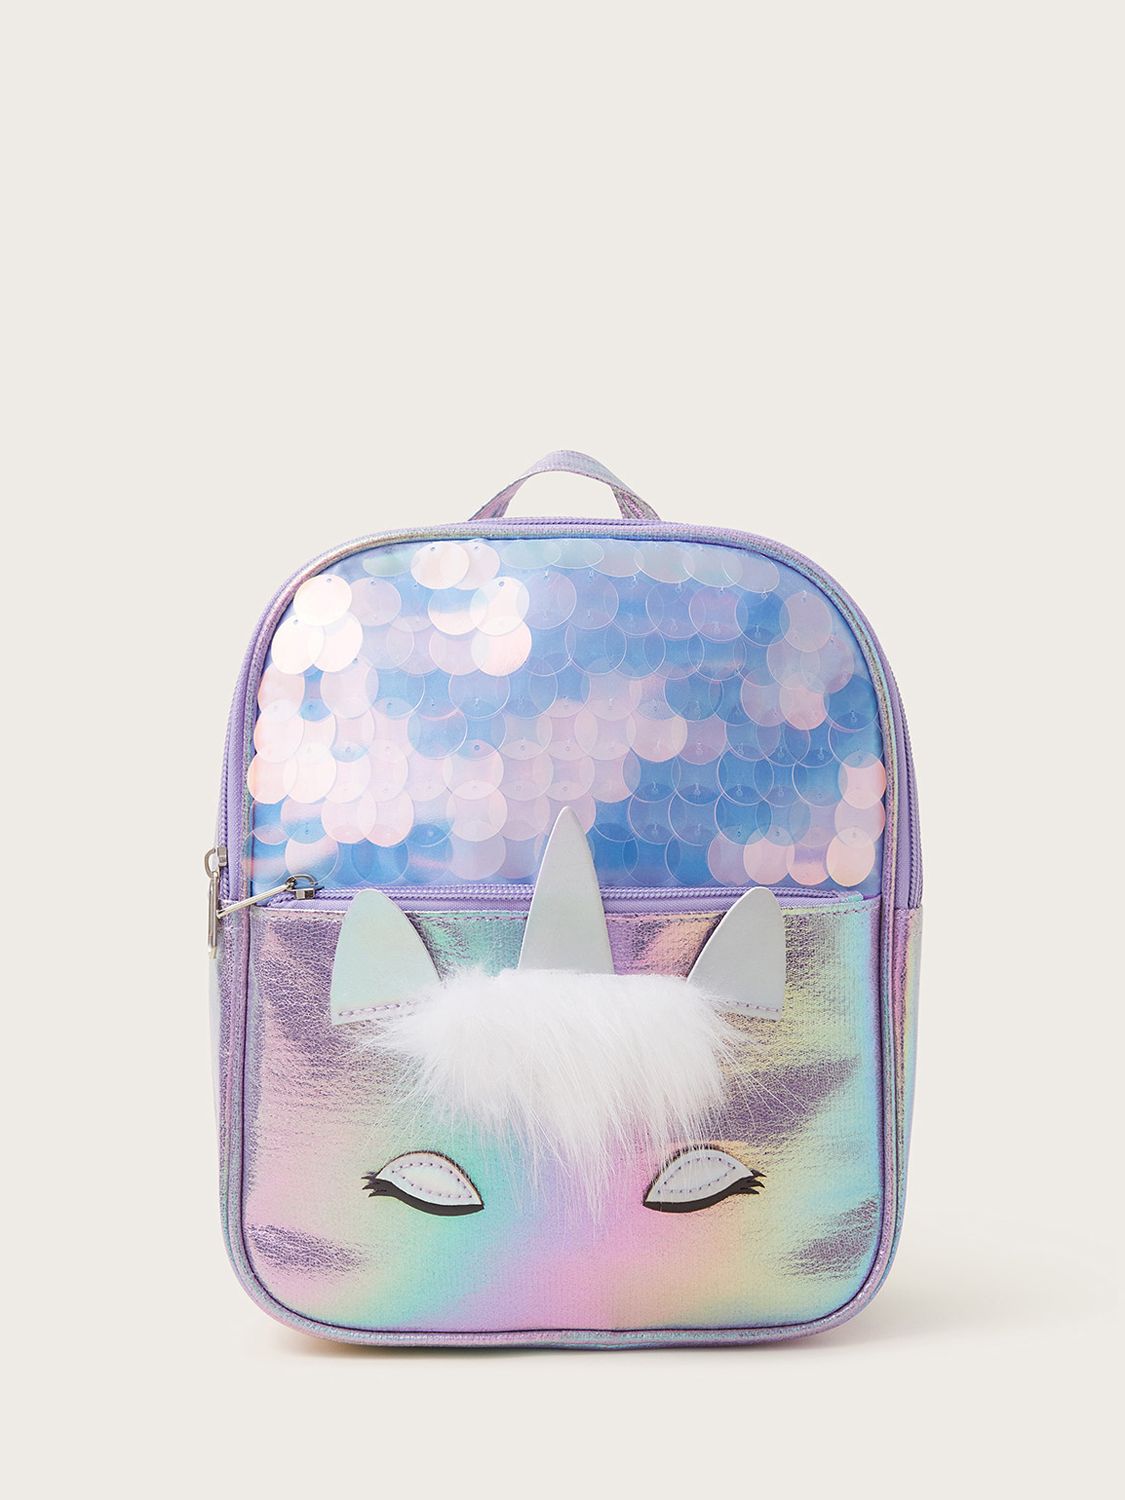 Monsoon Kids' Jazzy Unicorn Backpack, Lilac, One Size